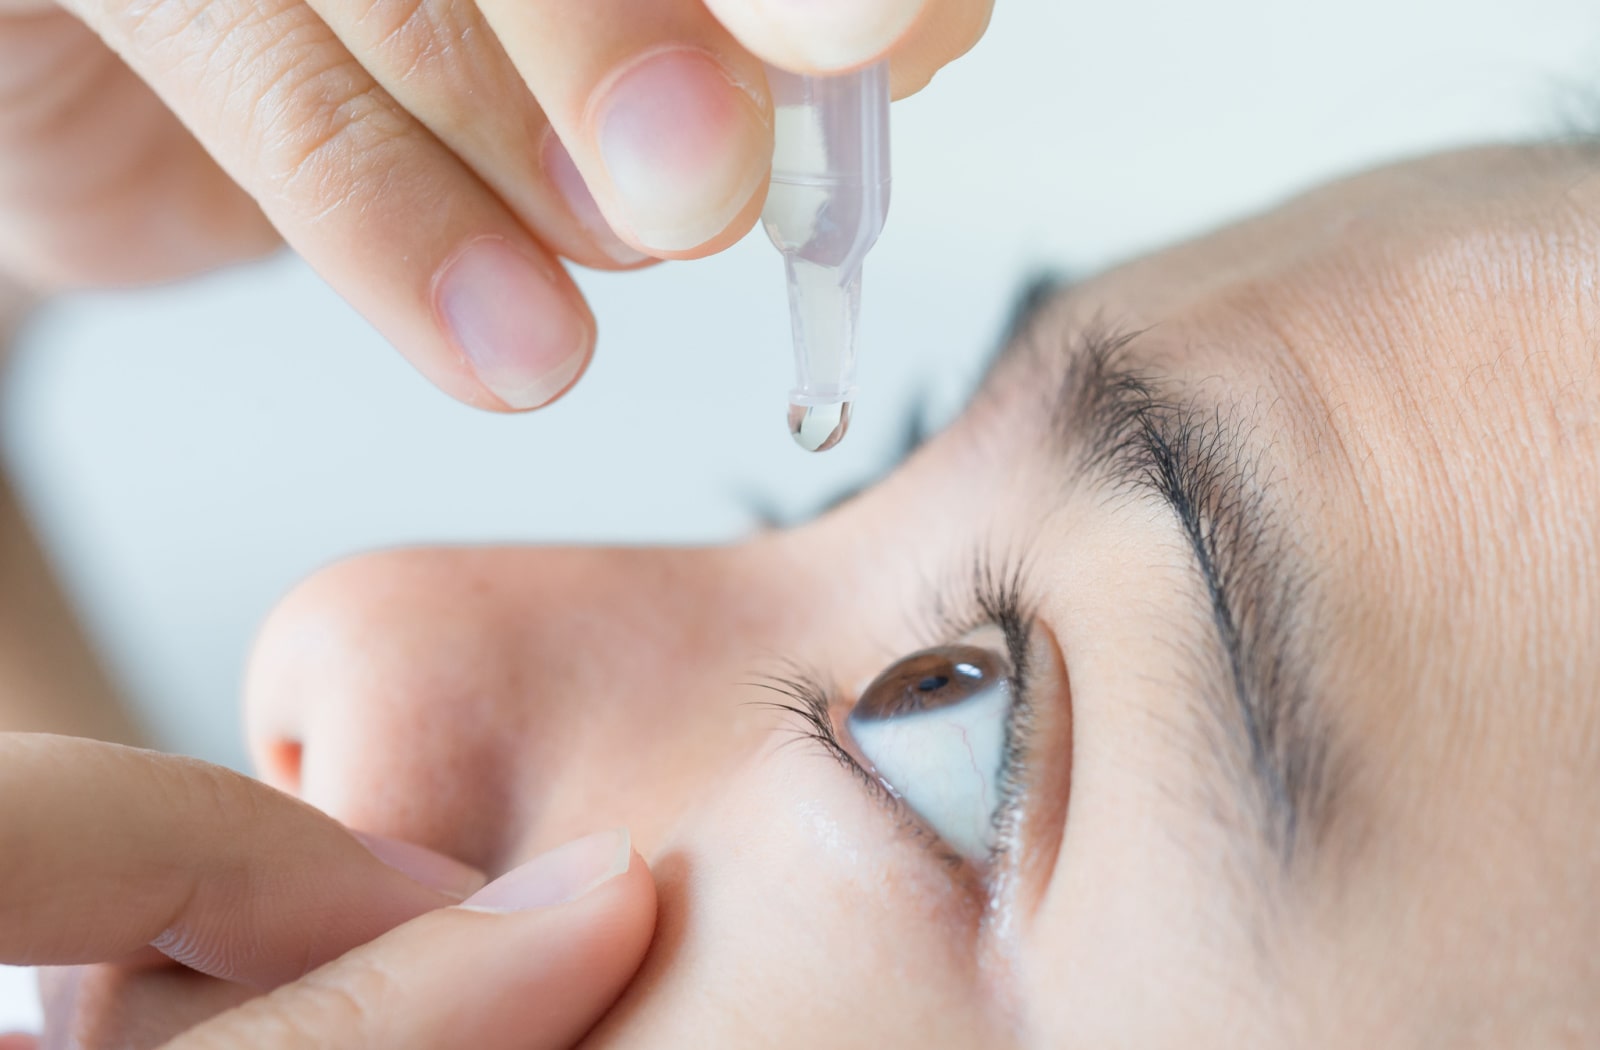 A woman putting eye drops into her eye